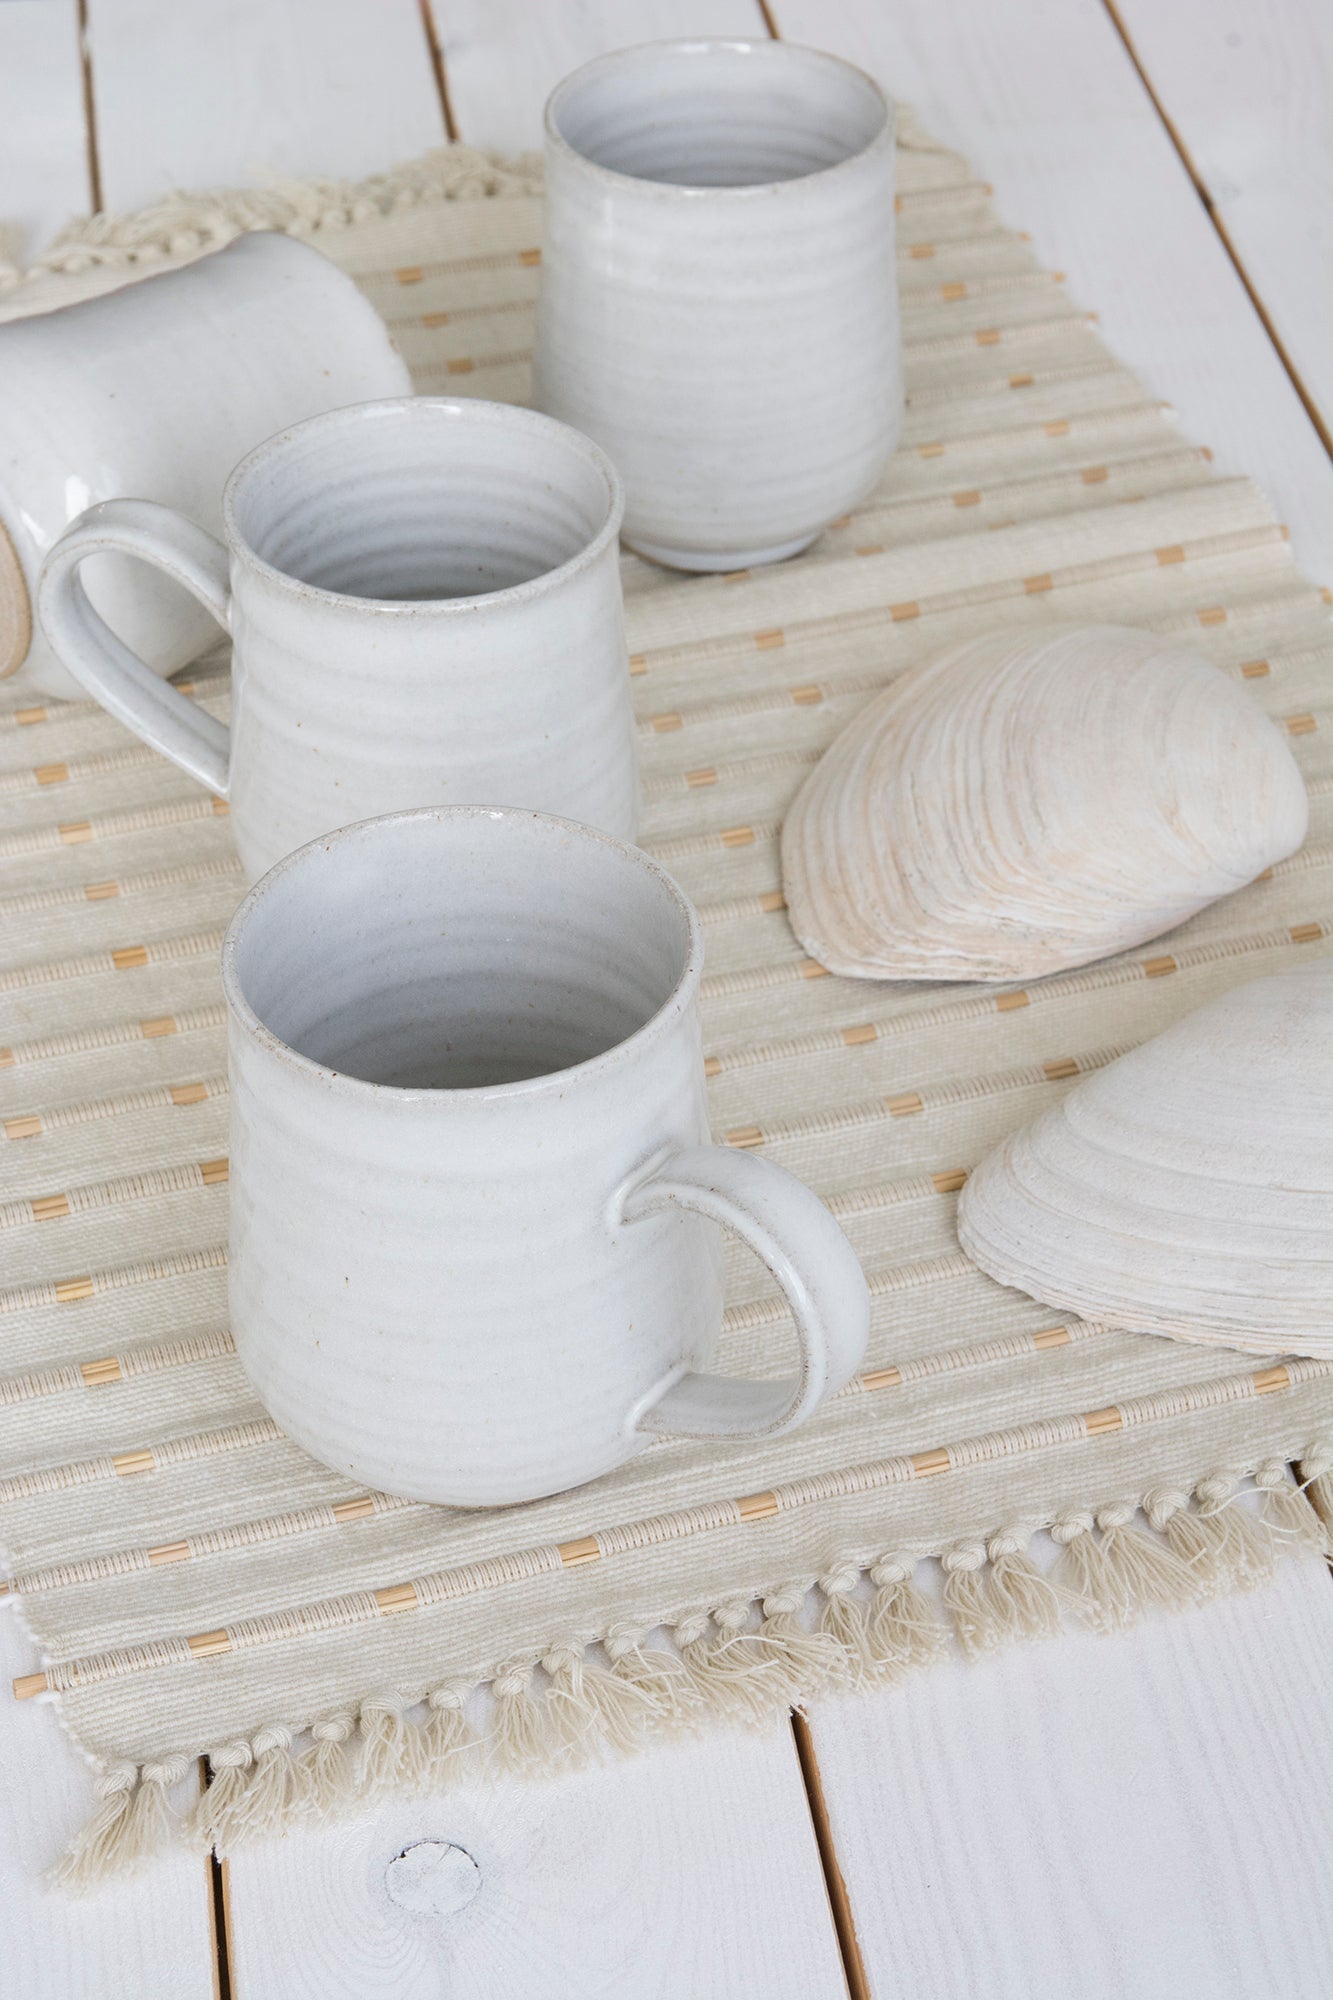 Light Blue Pottery Mug, 10 fl oz - Mad About Pottery- Mugs and Cups